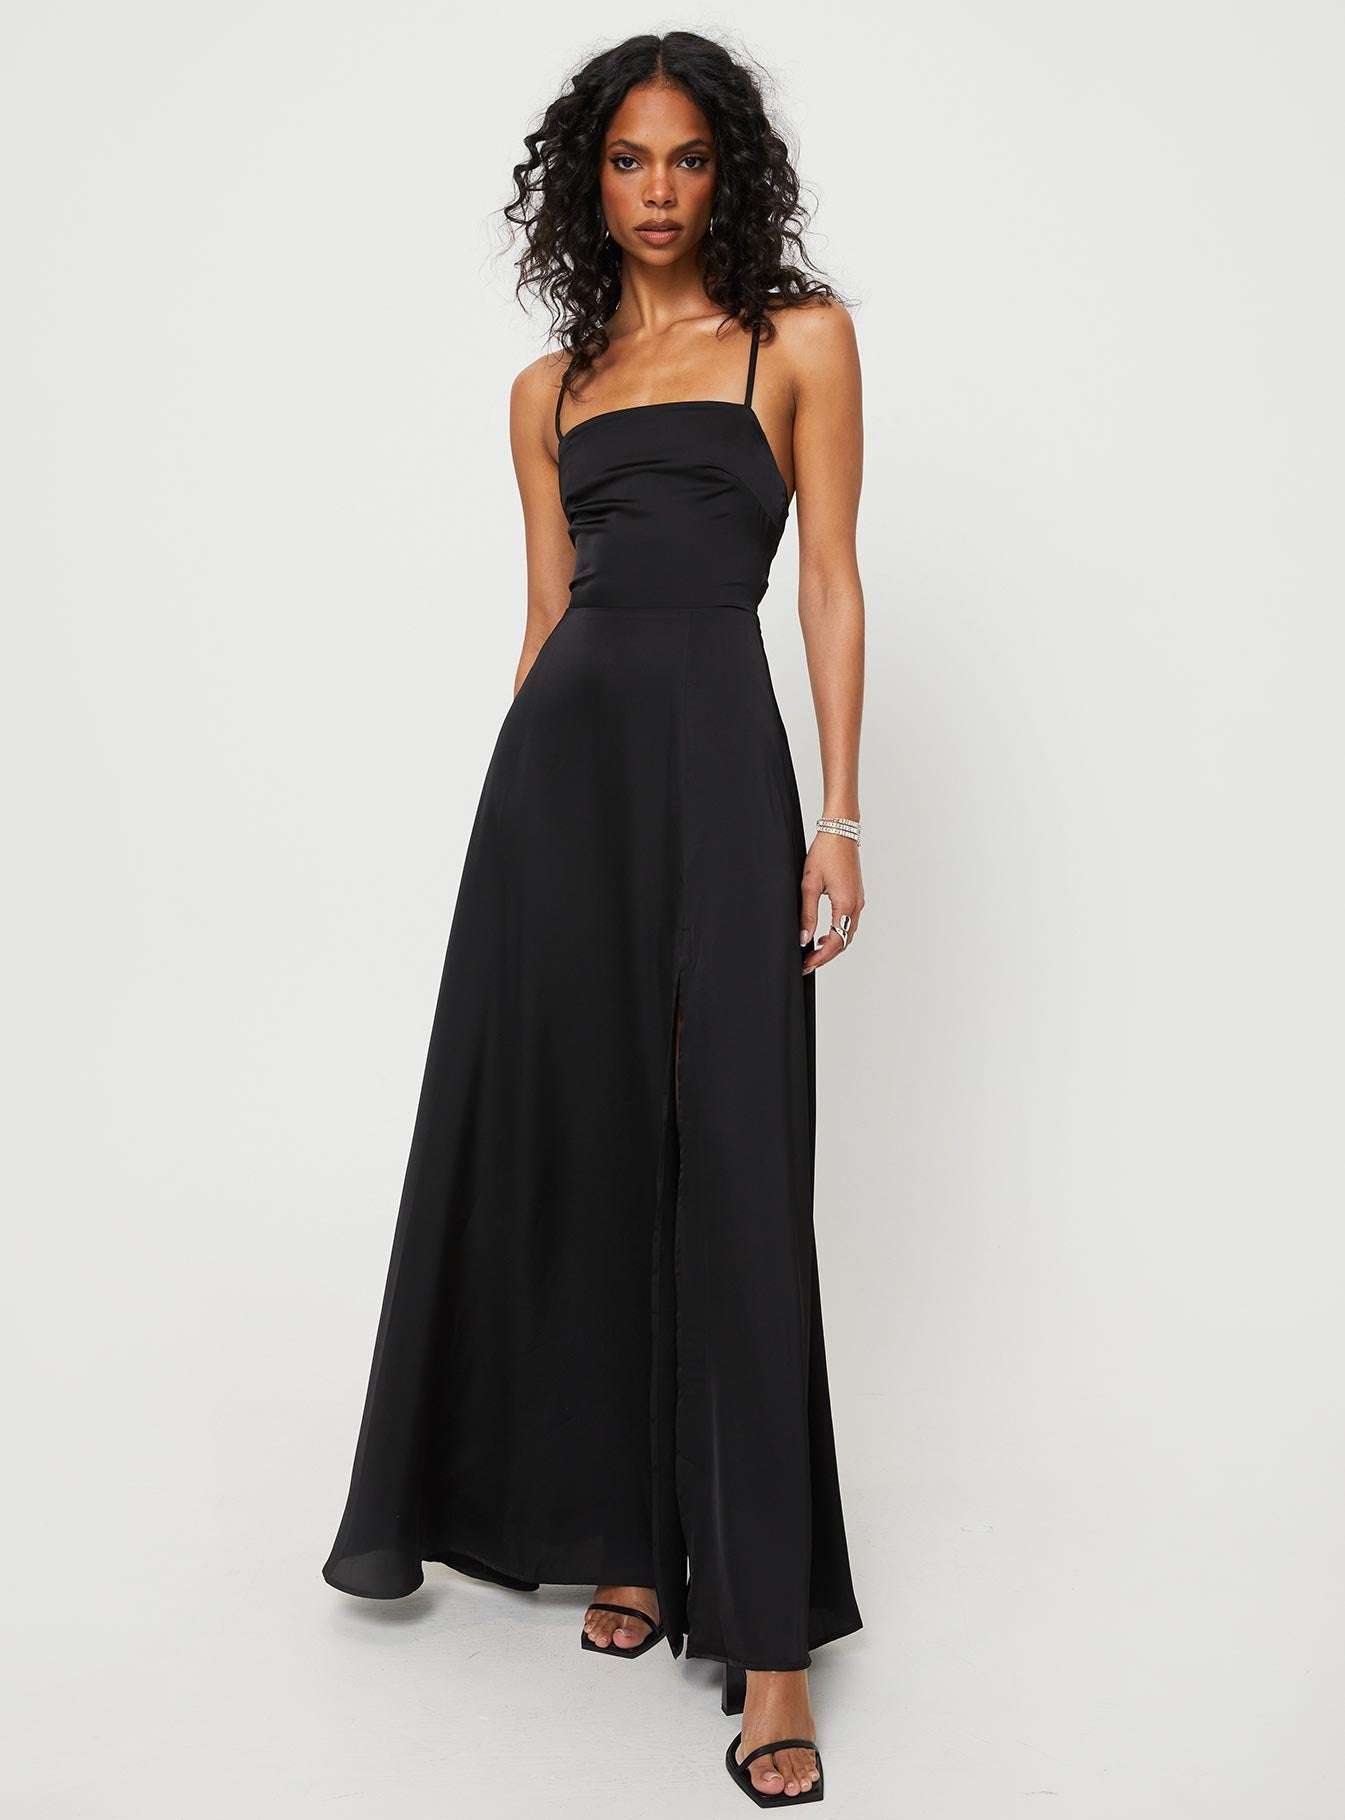 Shop Formal Dress - Kerwin Maxi Dress Black sixth image